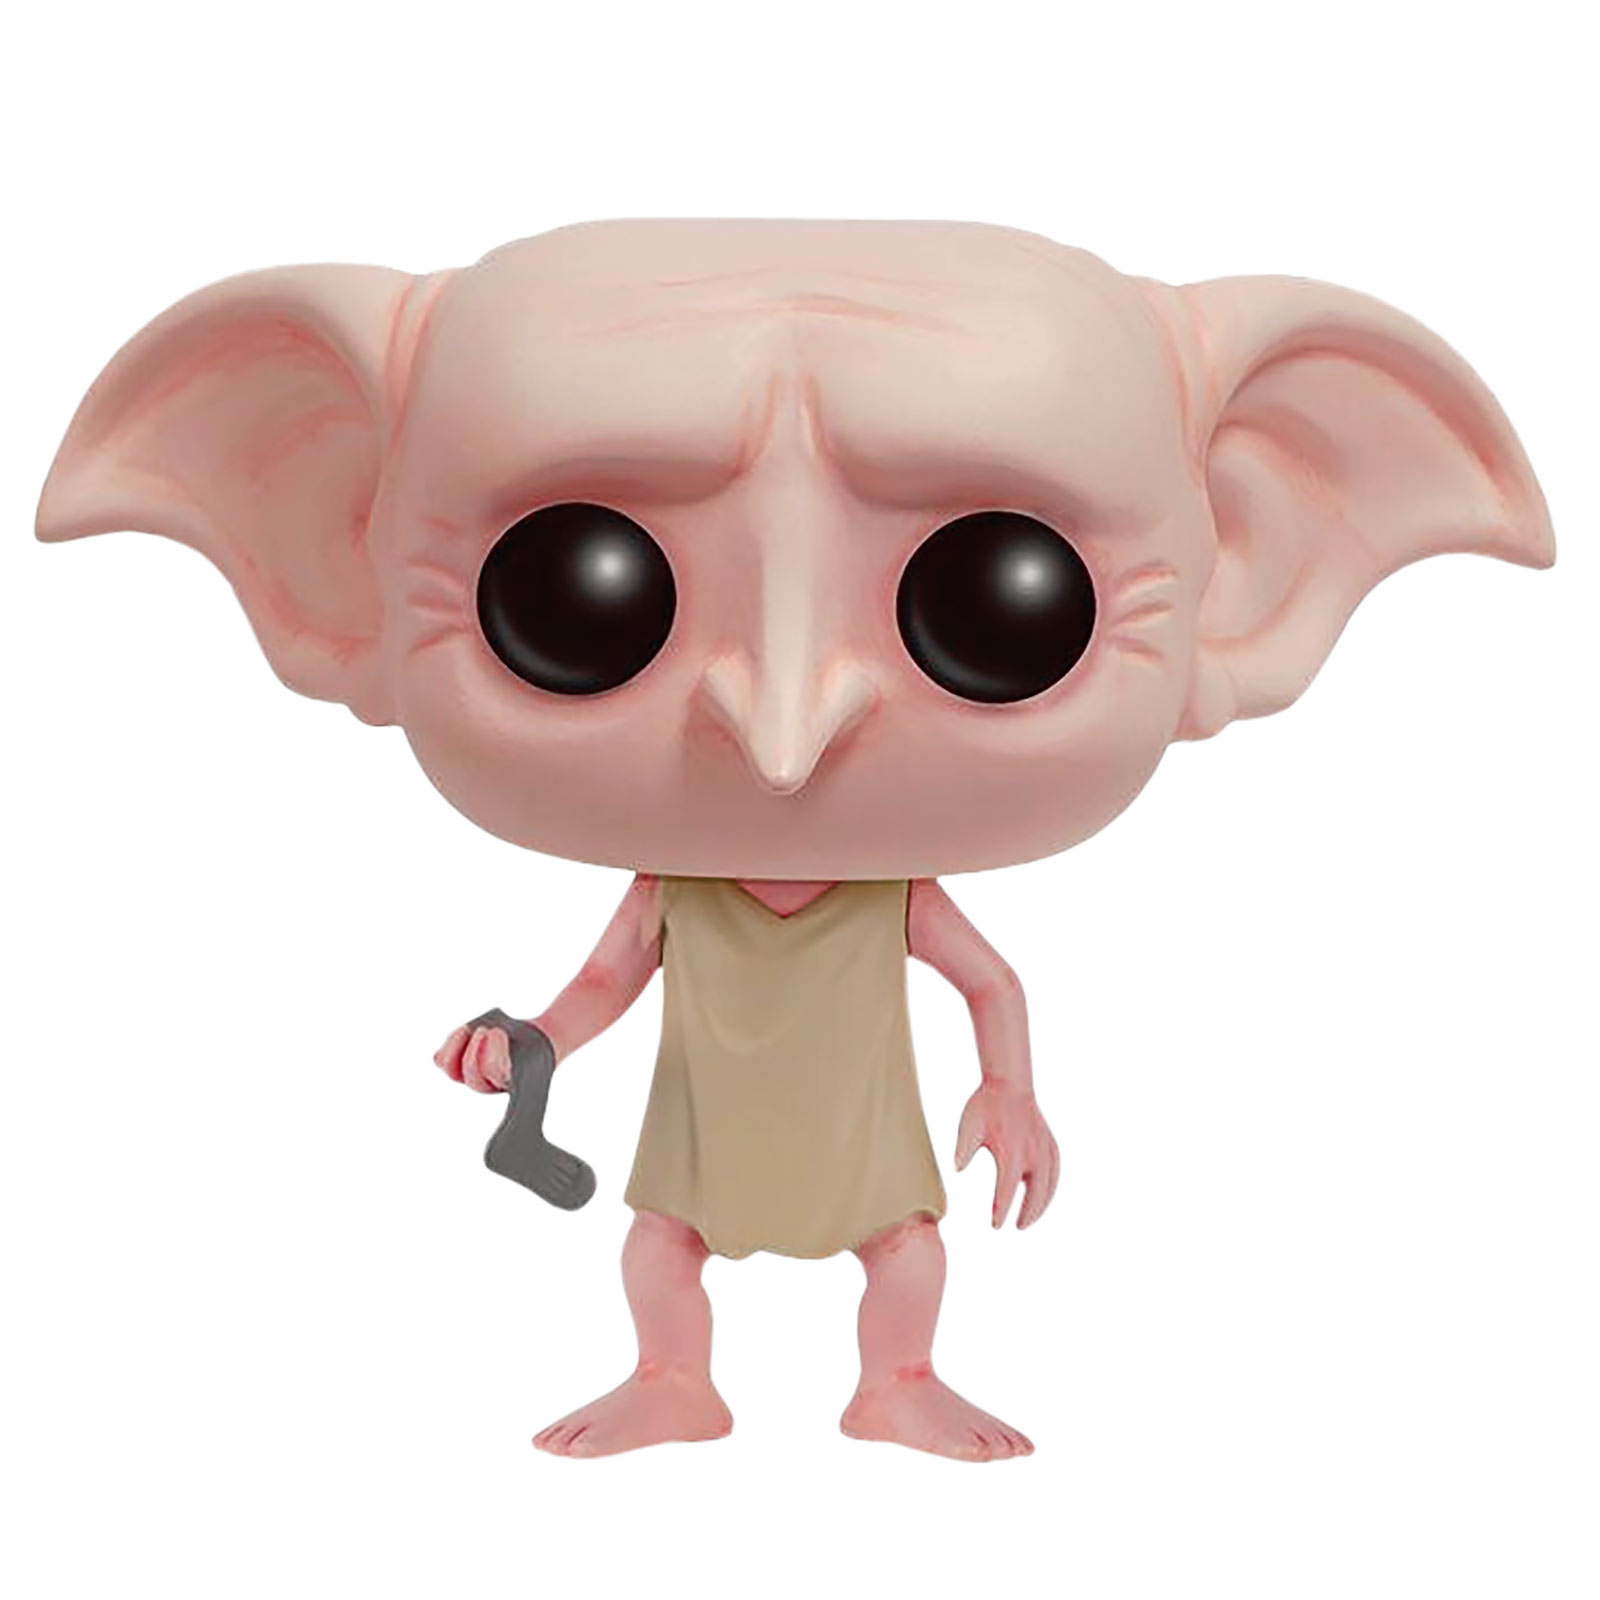 Harry Potter - Mini figurine de Dobby